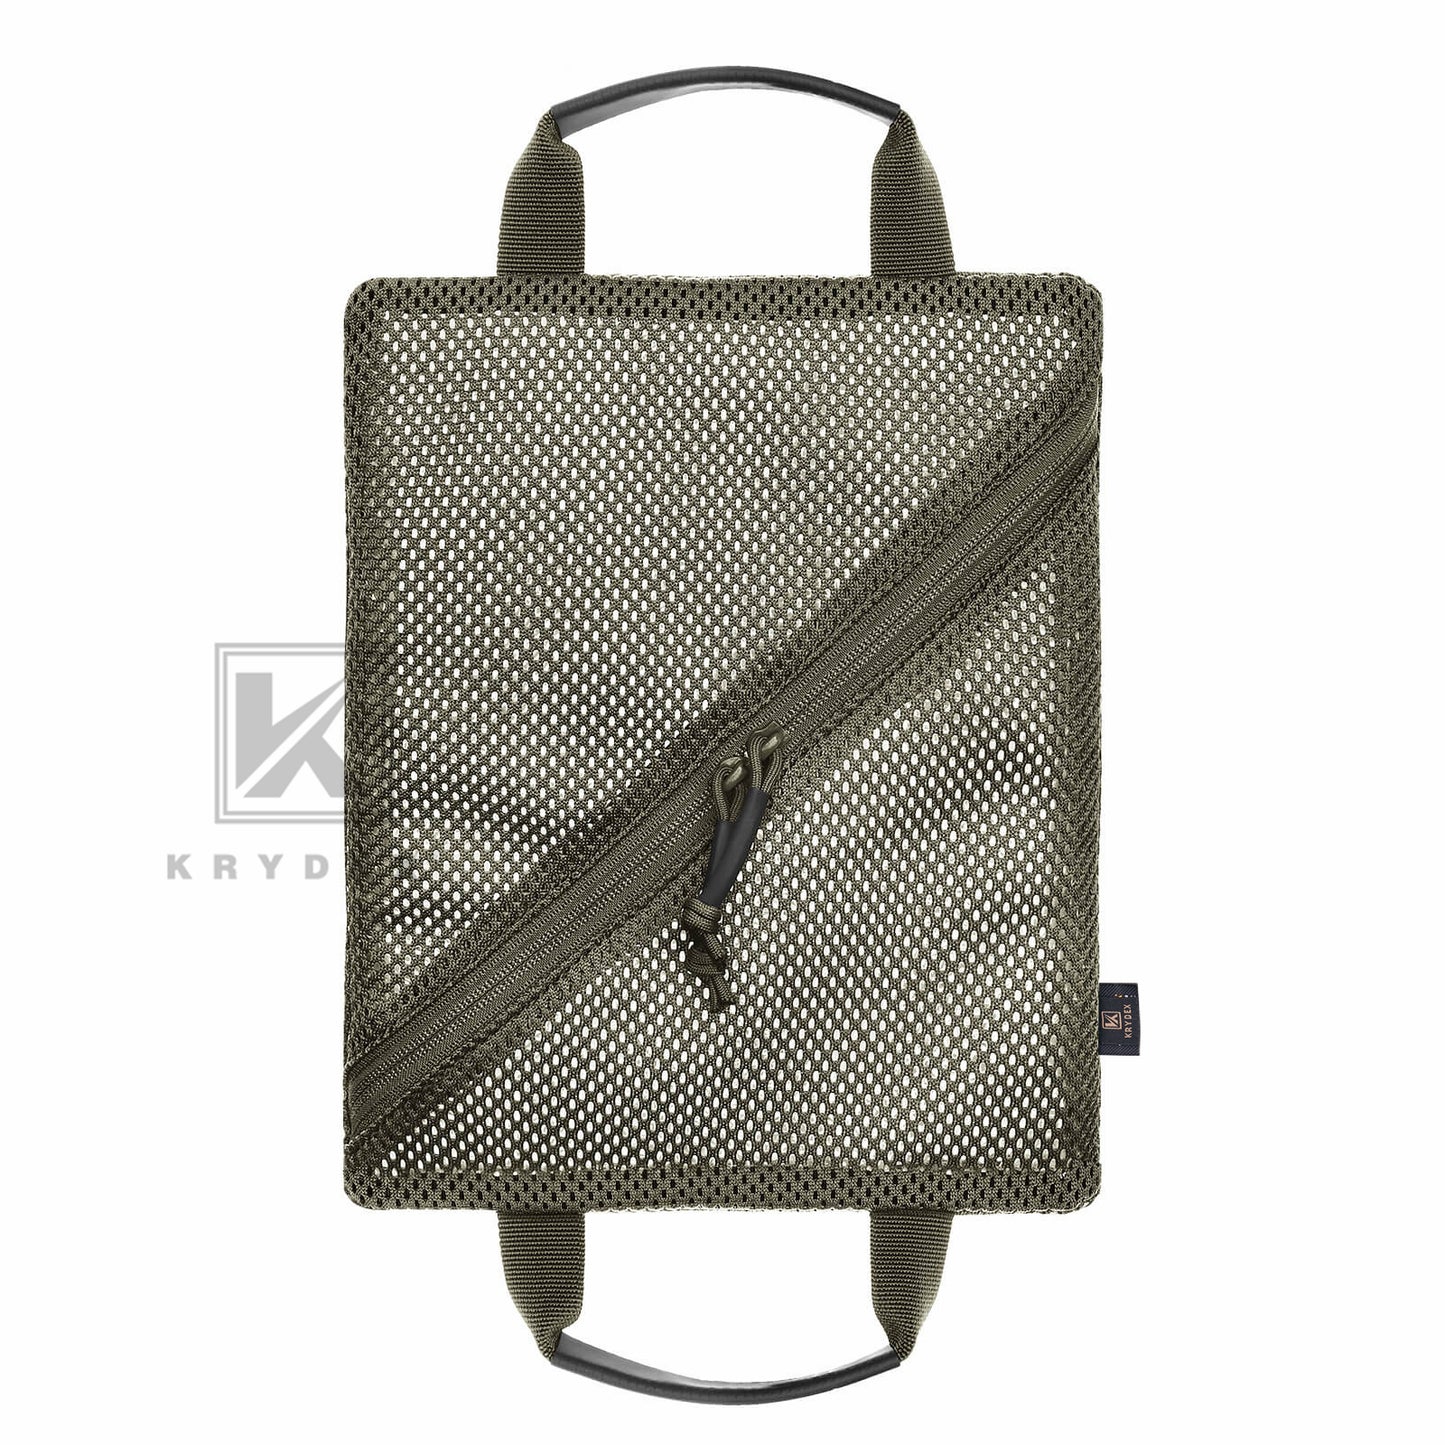 Krydex Tactical Storage Mesh Pouch Set Insert Modular Utility Admin Pockets Travel Organizer EDC Bag